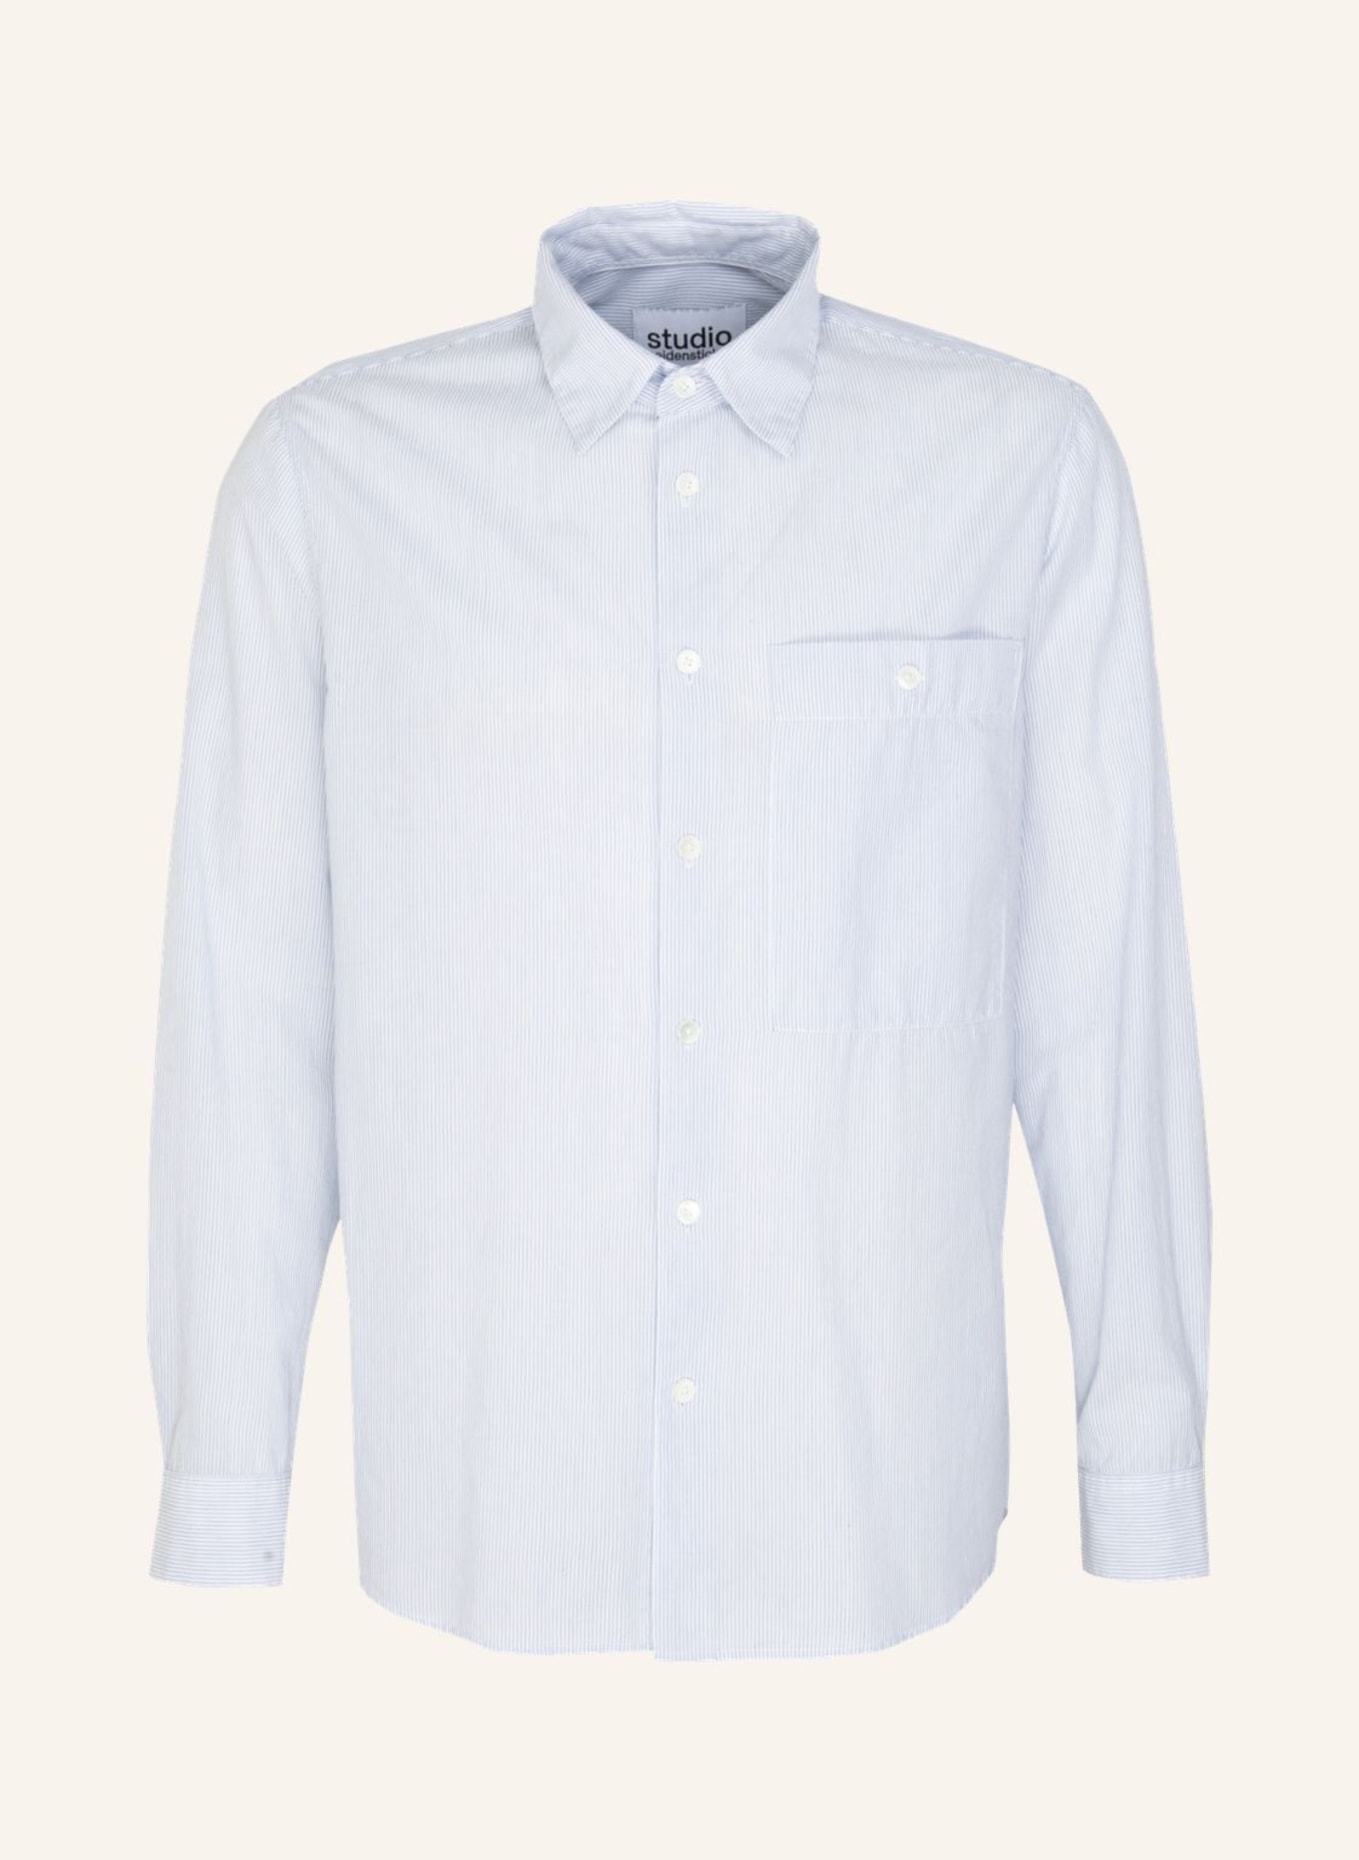 studio seidensticker Casual Hemd, Hemd Regular Fit, Farbe: BLAU (Bild 1)